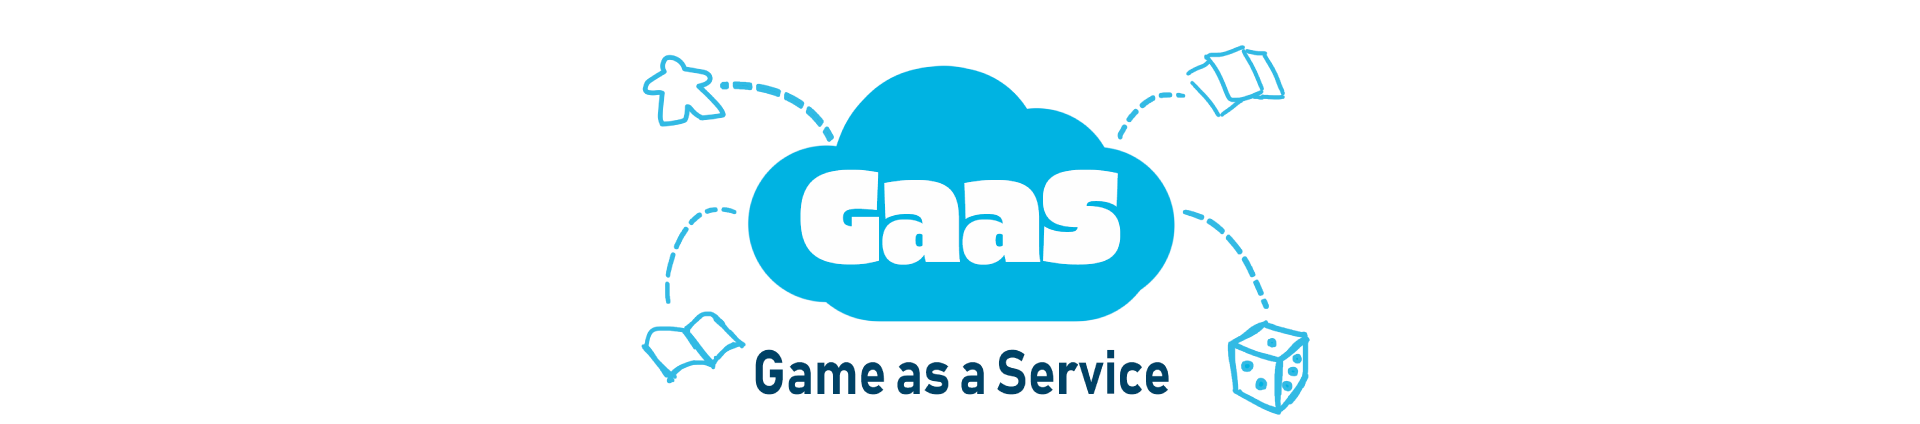 Games As a Service